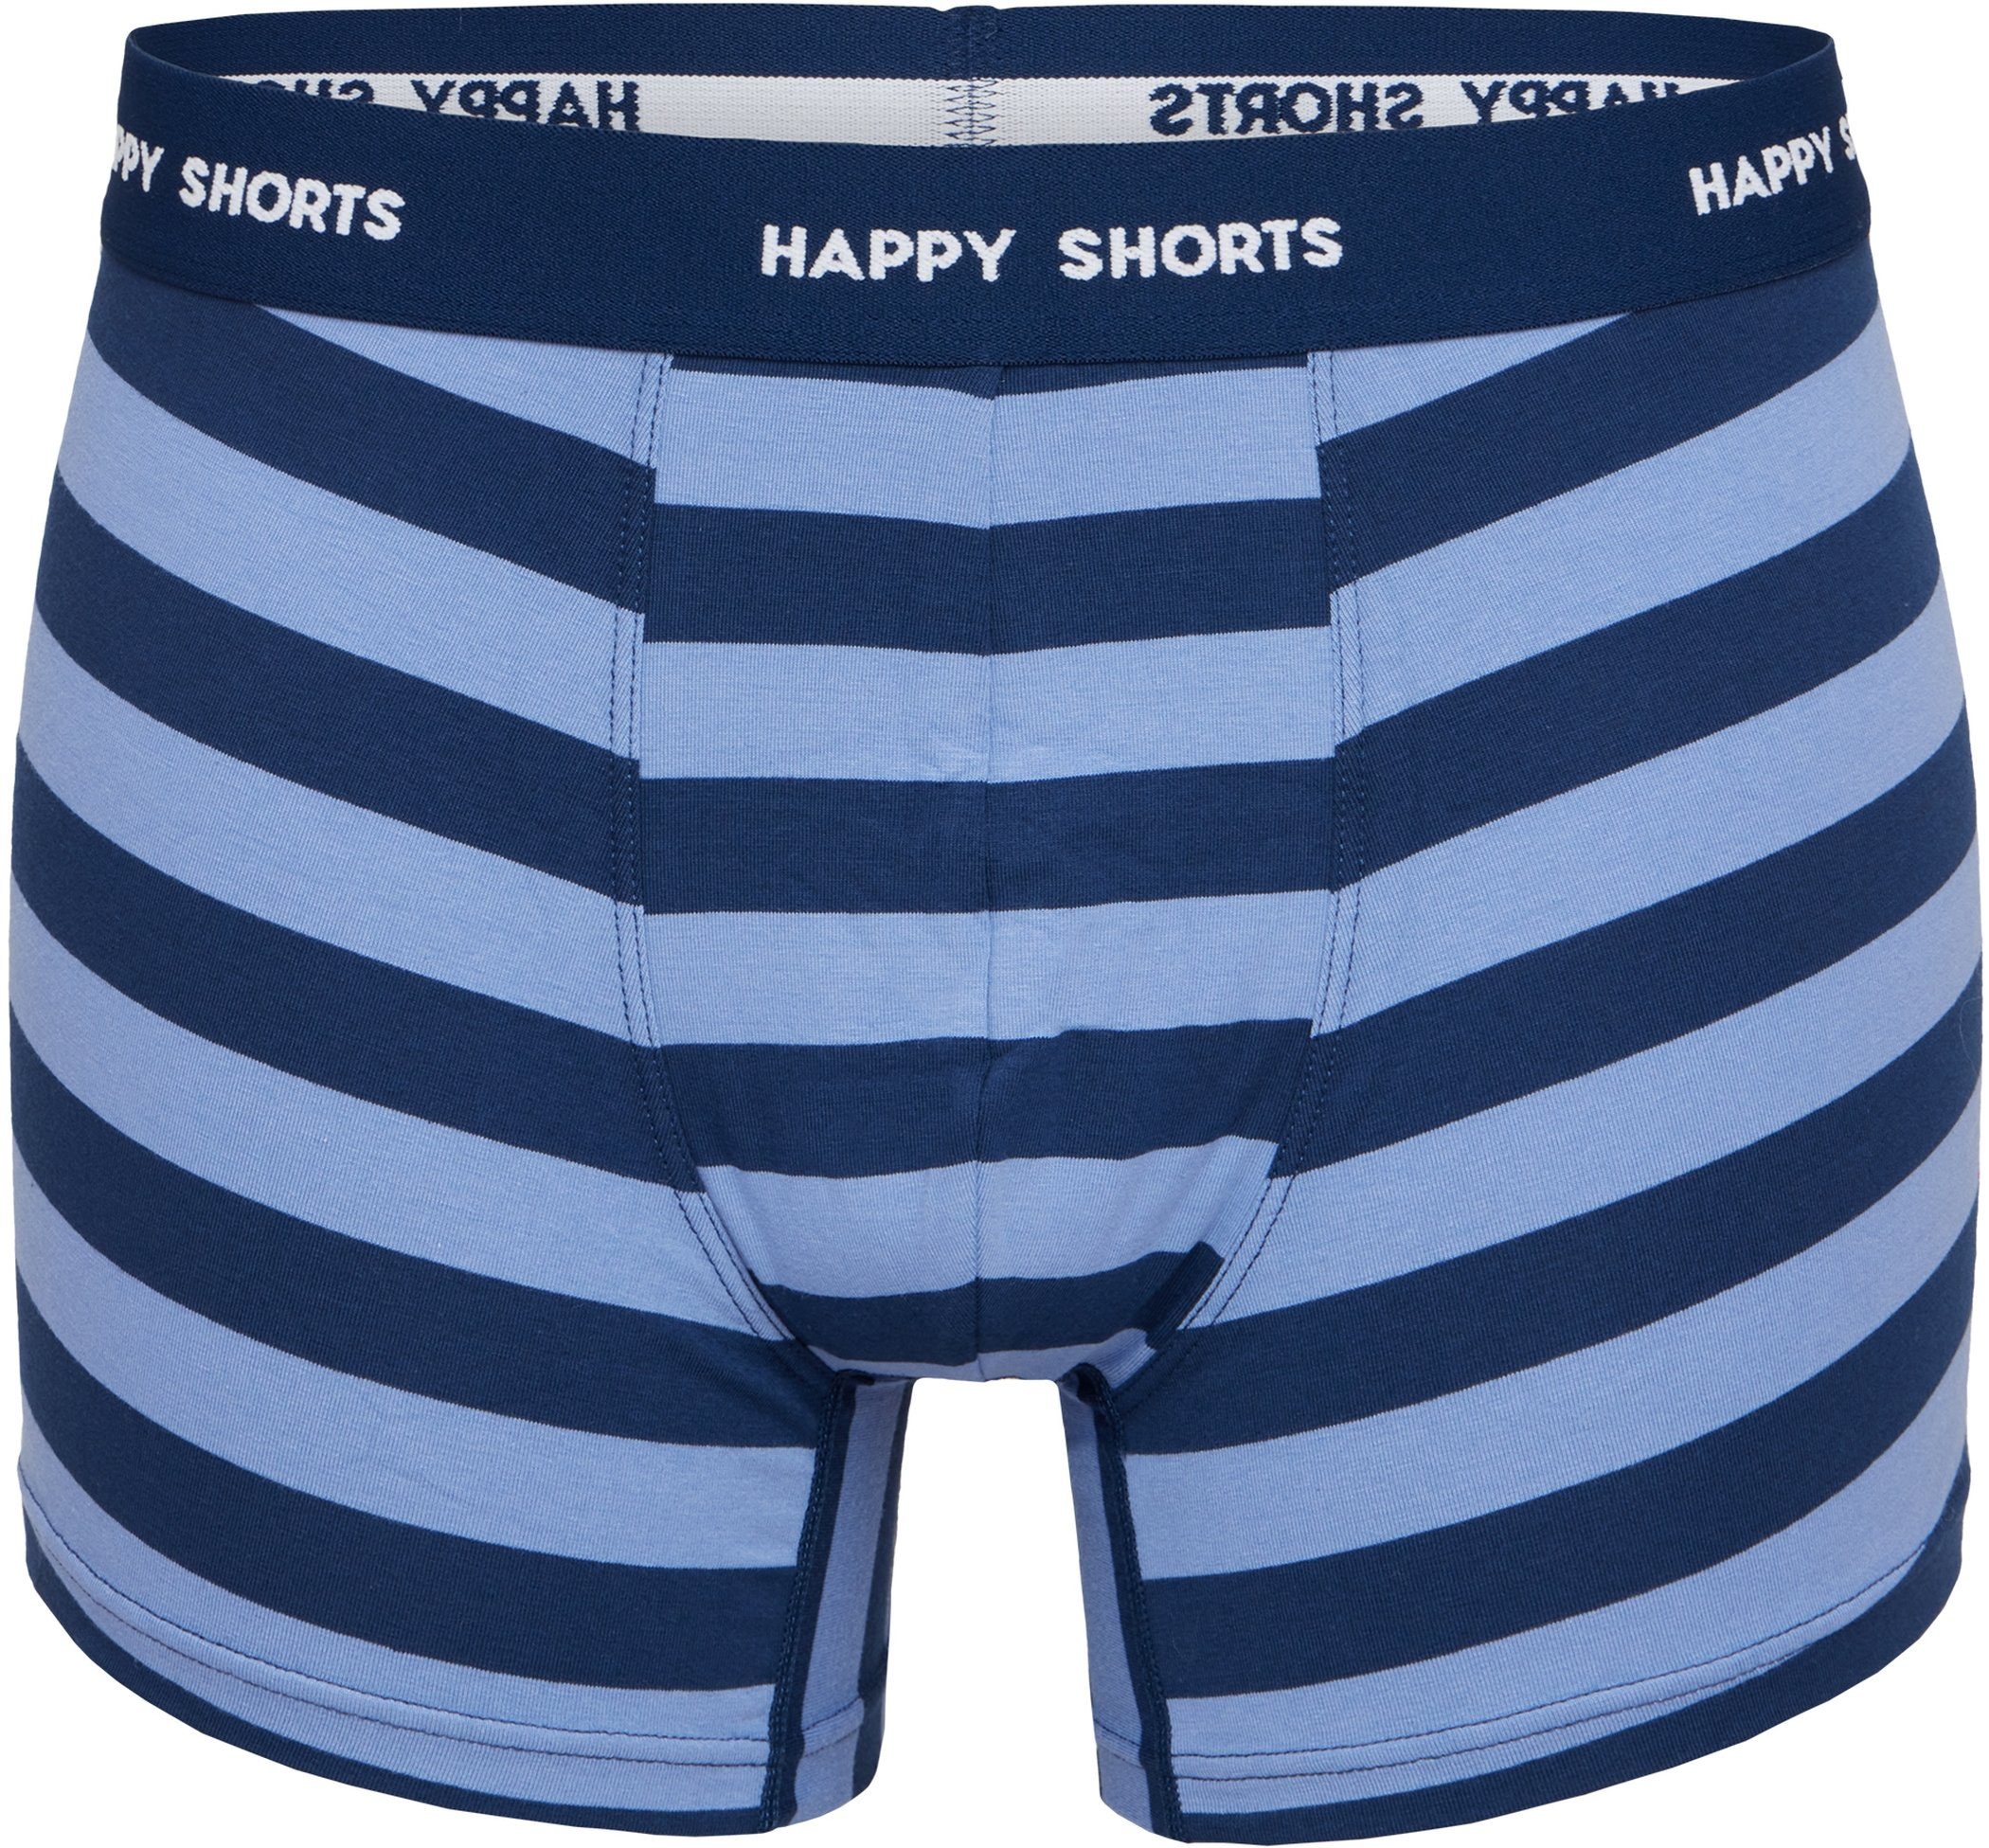 4er Trunk SHORTS Happy Sparpack Jersey HAPPY Shorts Boxershorts Herren Pants Trunk Pant (1-St)